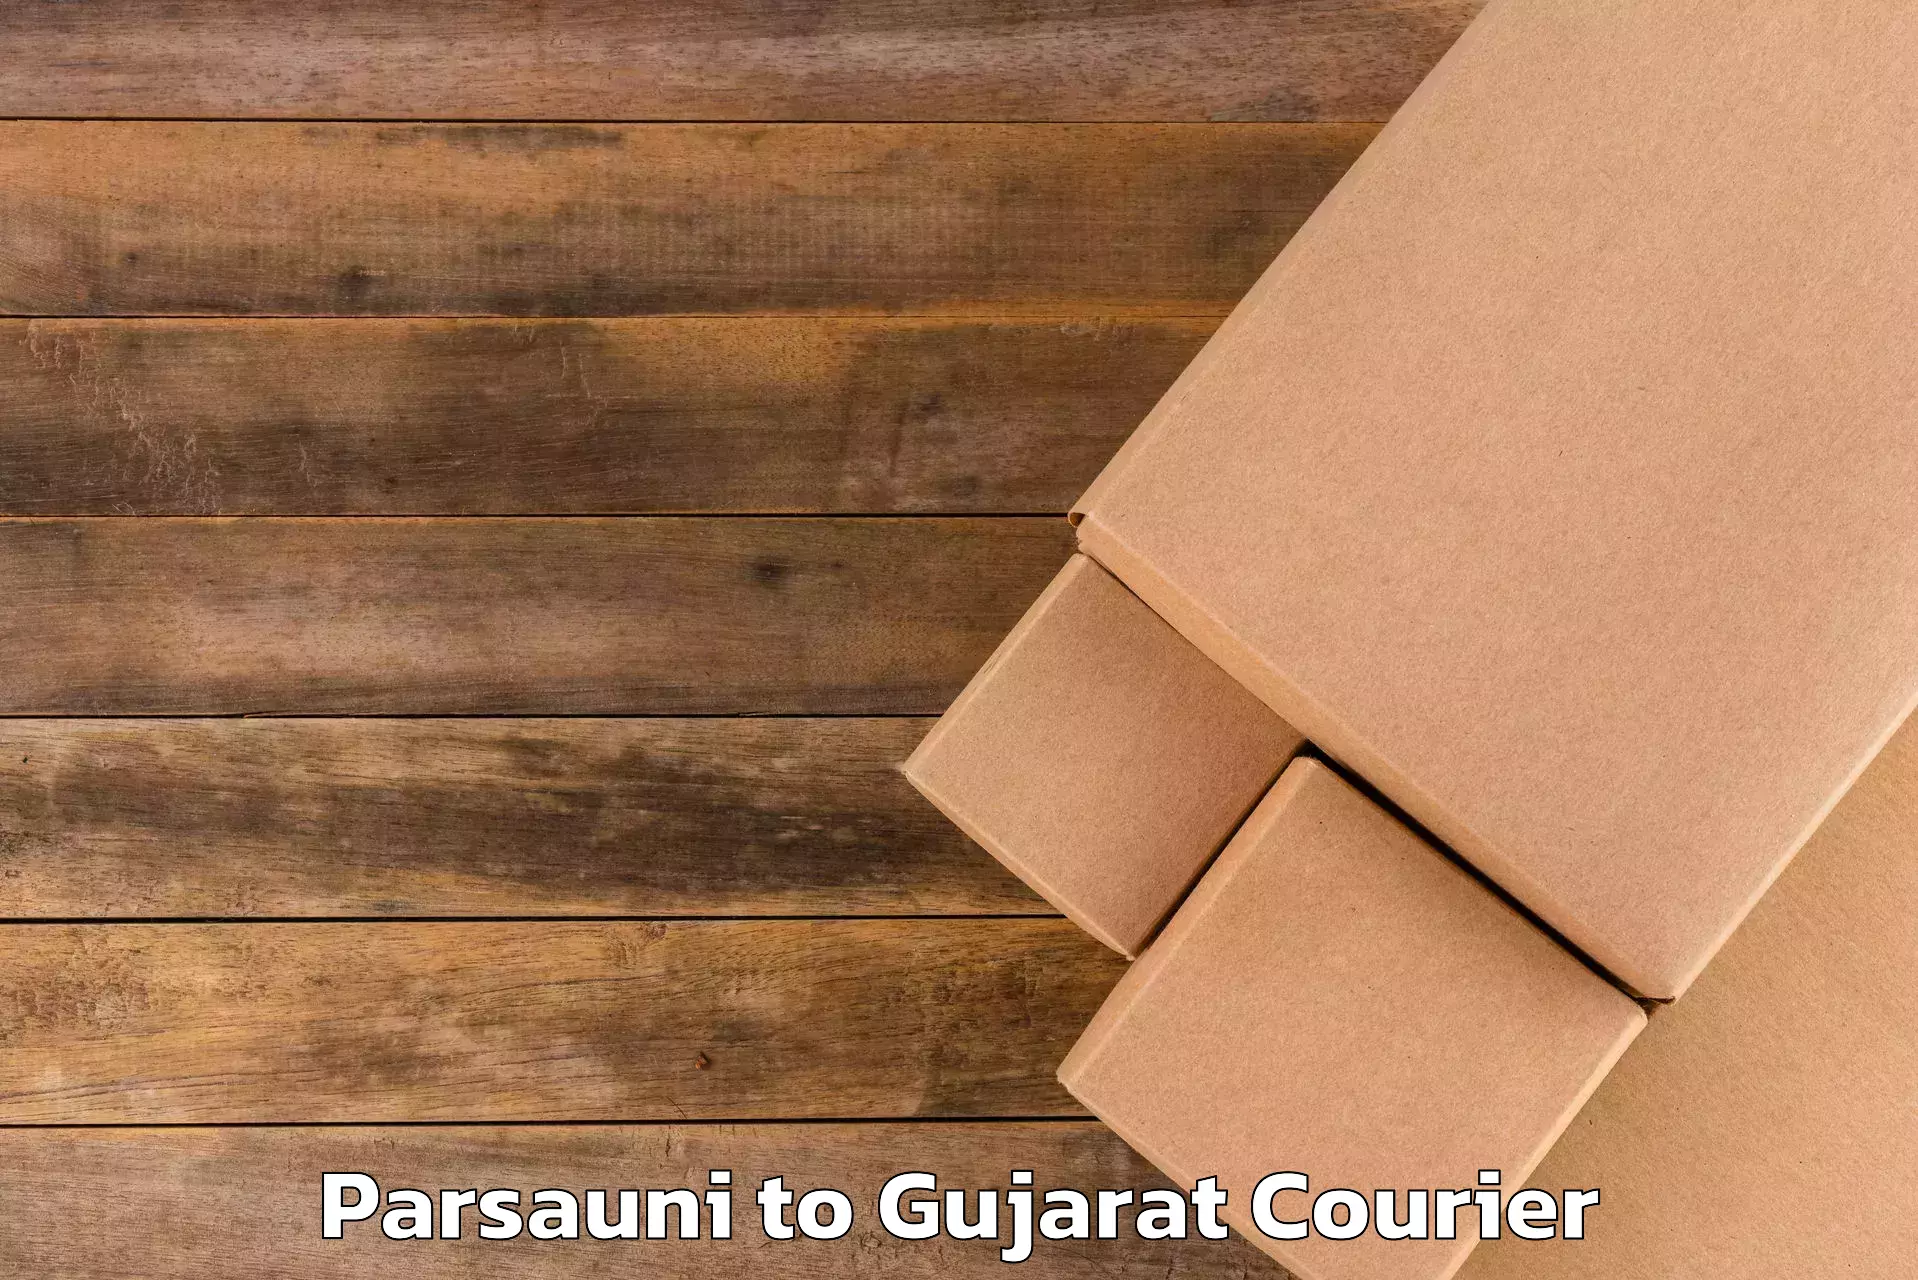 Urgent luggage shipment in Parsauni to Gujarat